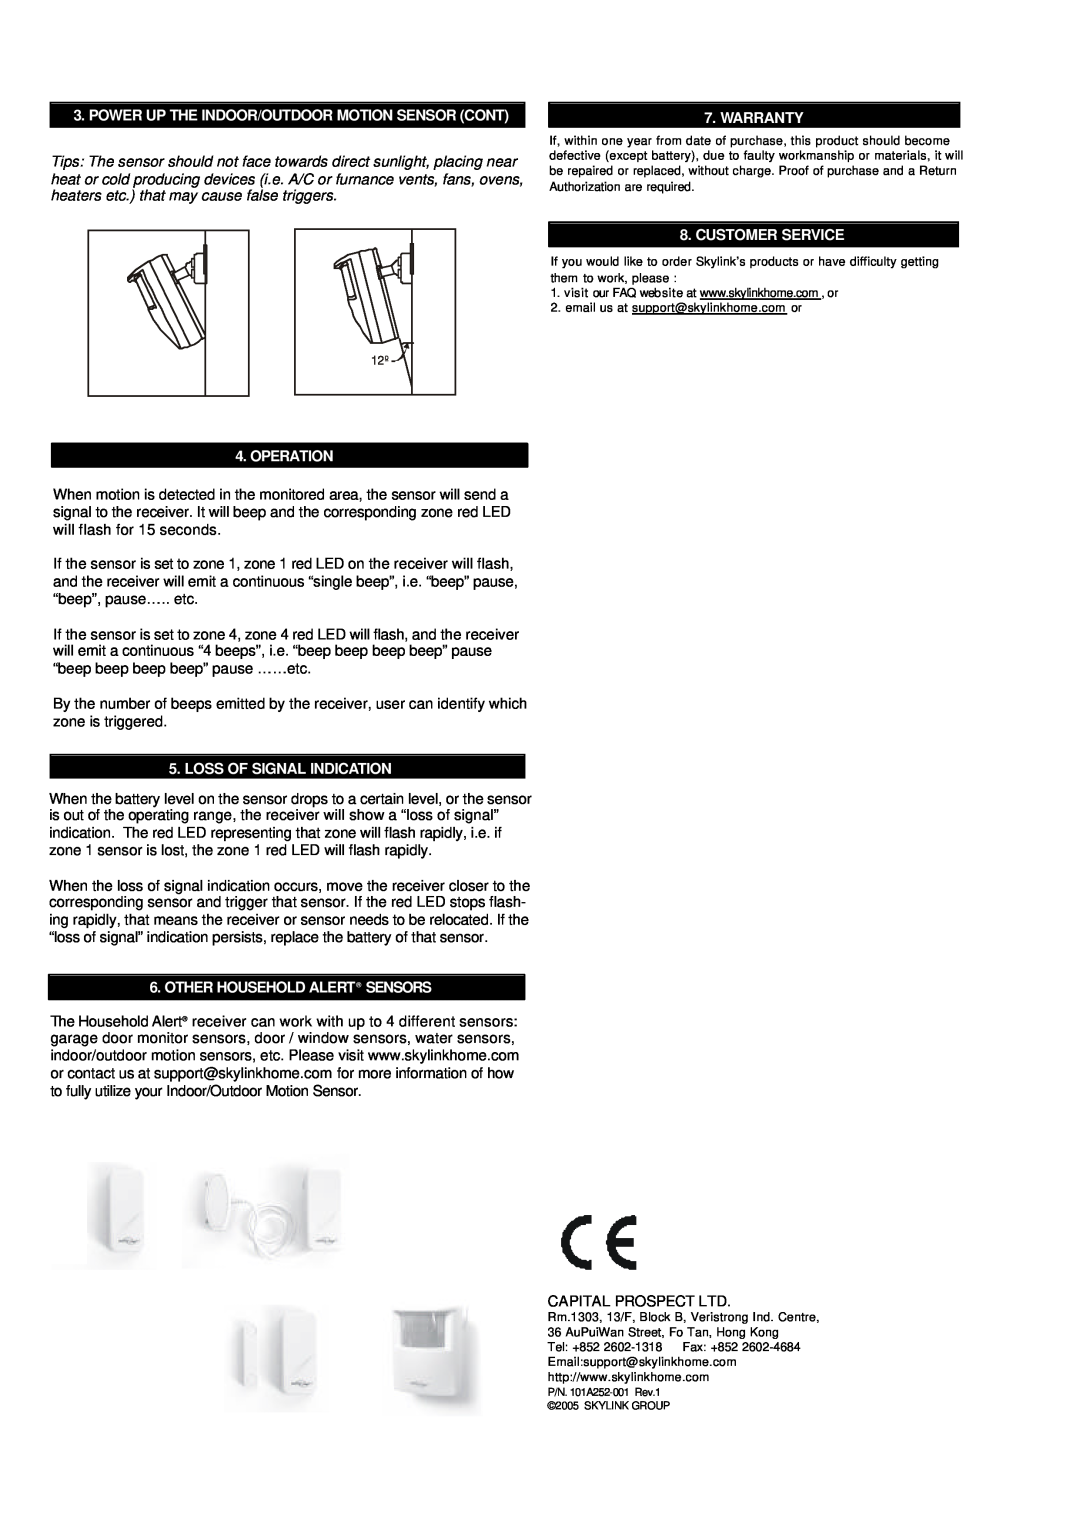 SkyLink HA-434T manual Power Up The Indoor/Outdoor Motion Sensor Cont, Warranty, Customer Service, Operation 